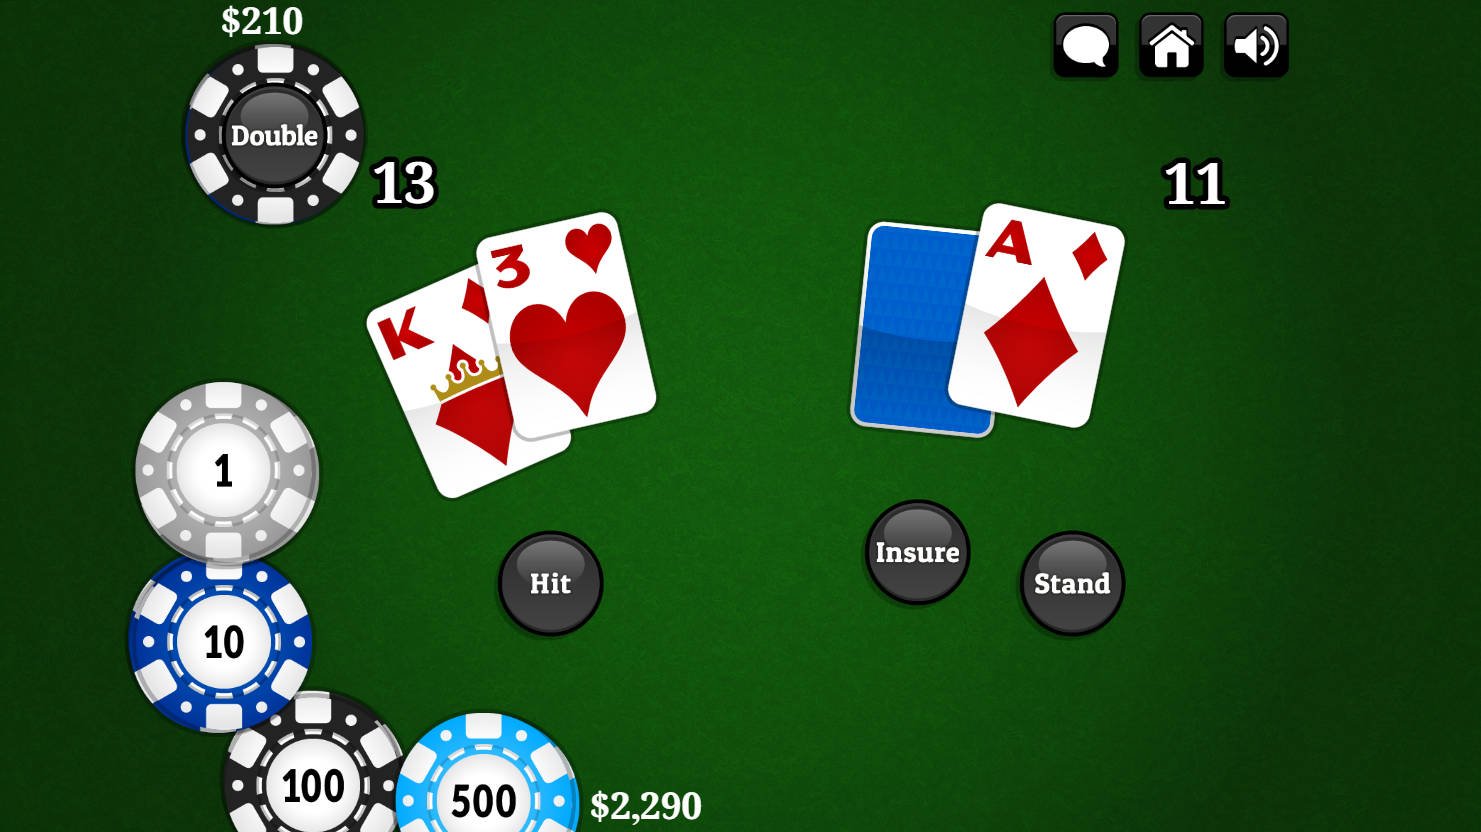 Free card games online - digital game of Blackjack